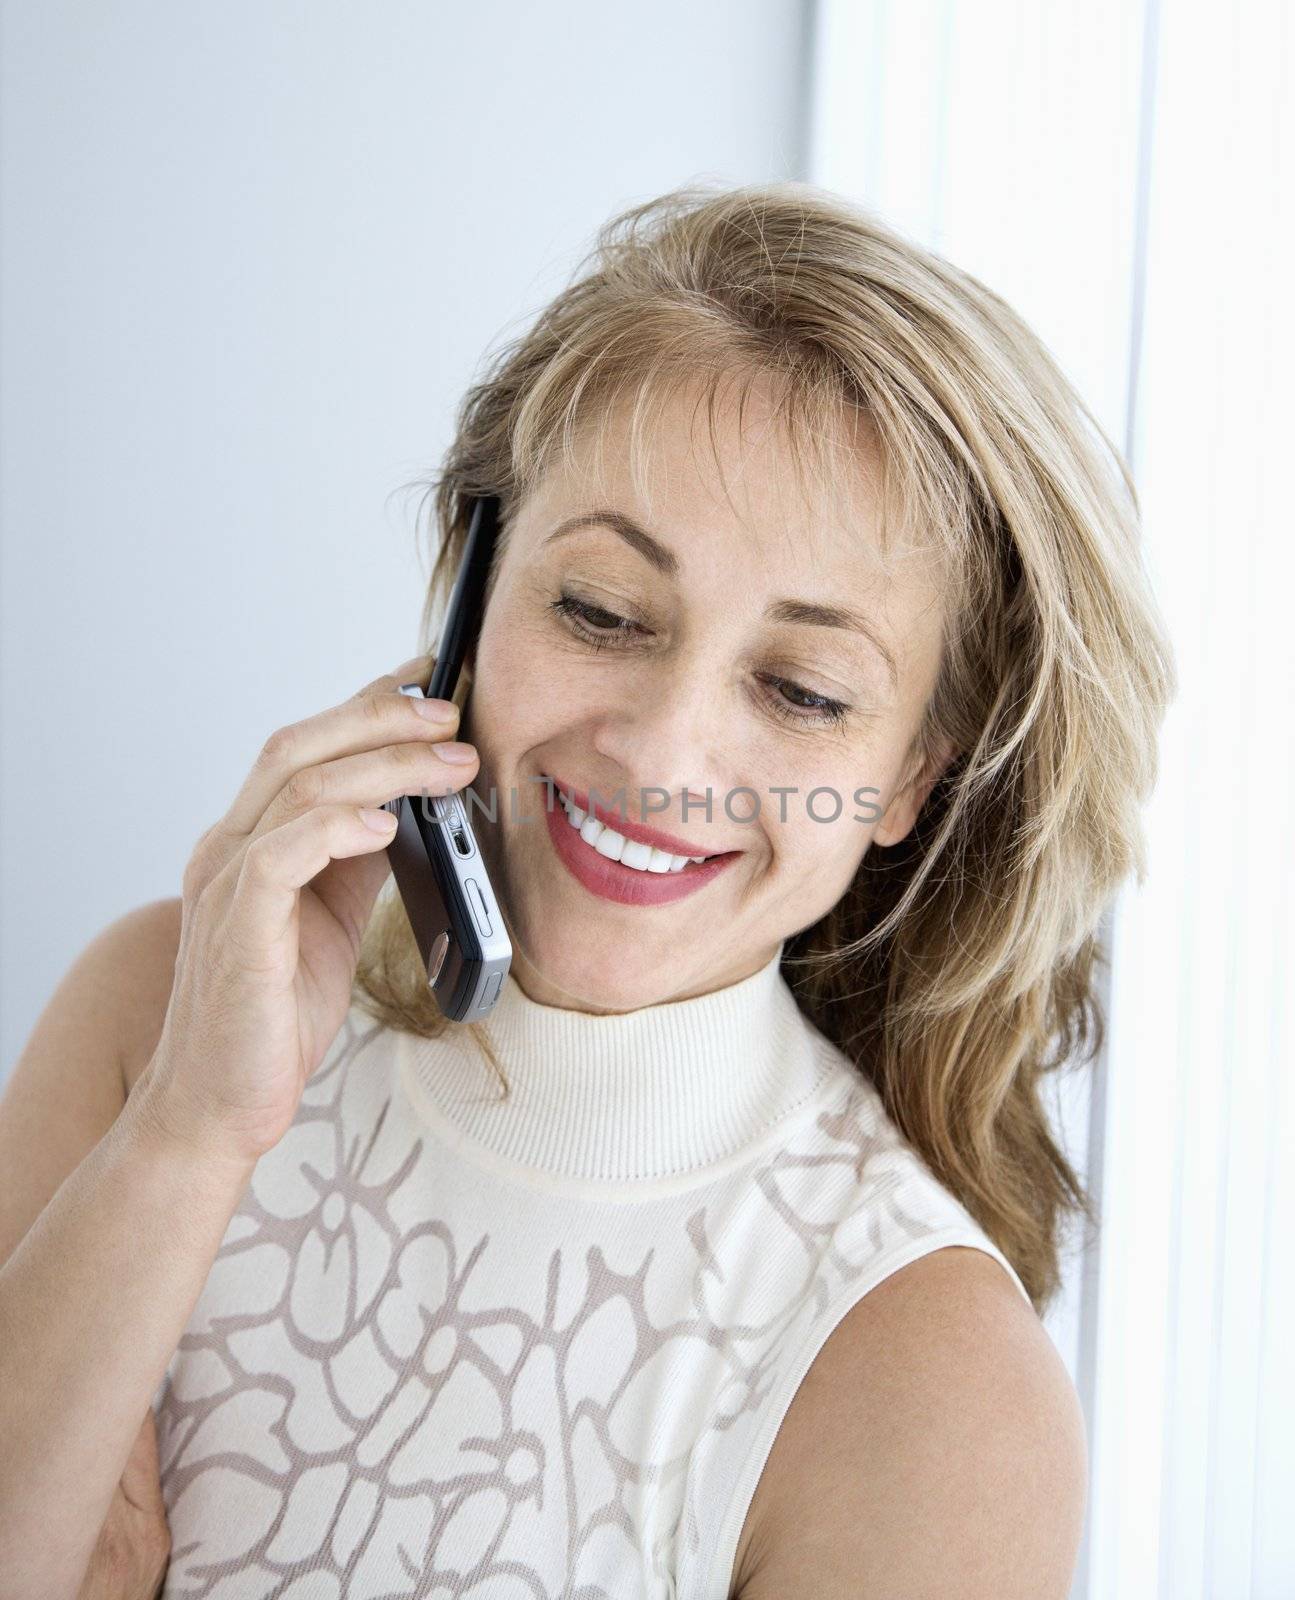 Caucasian woman on cellphone.